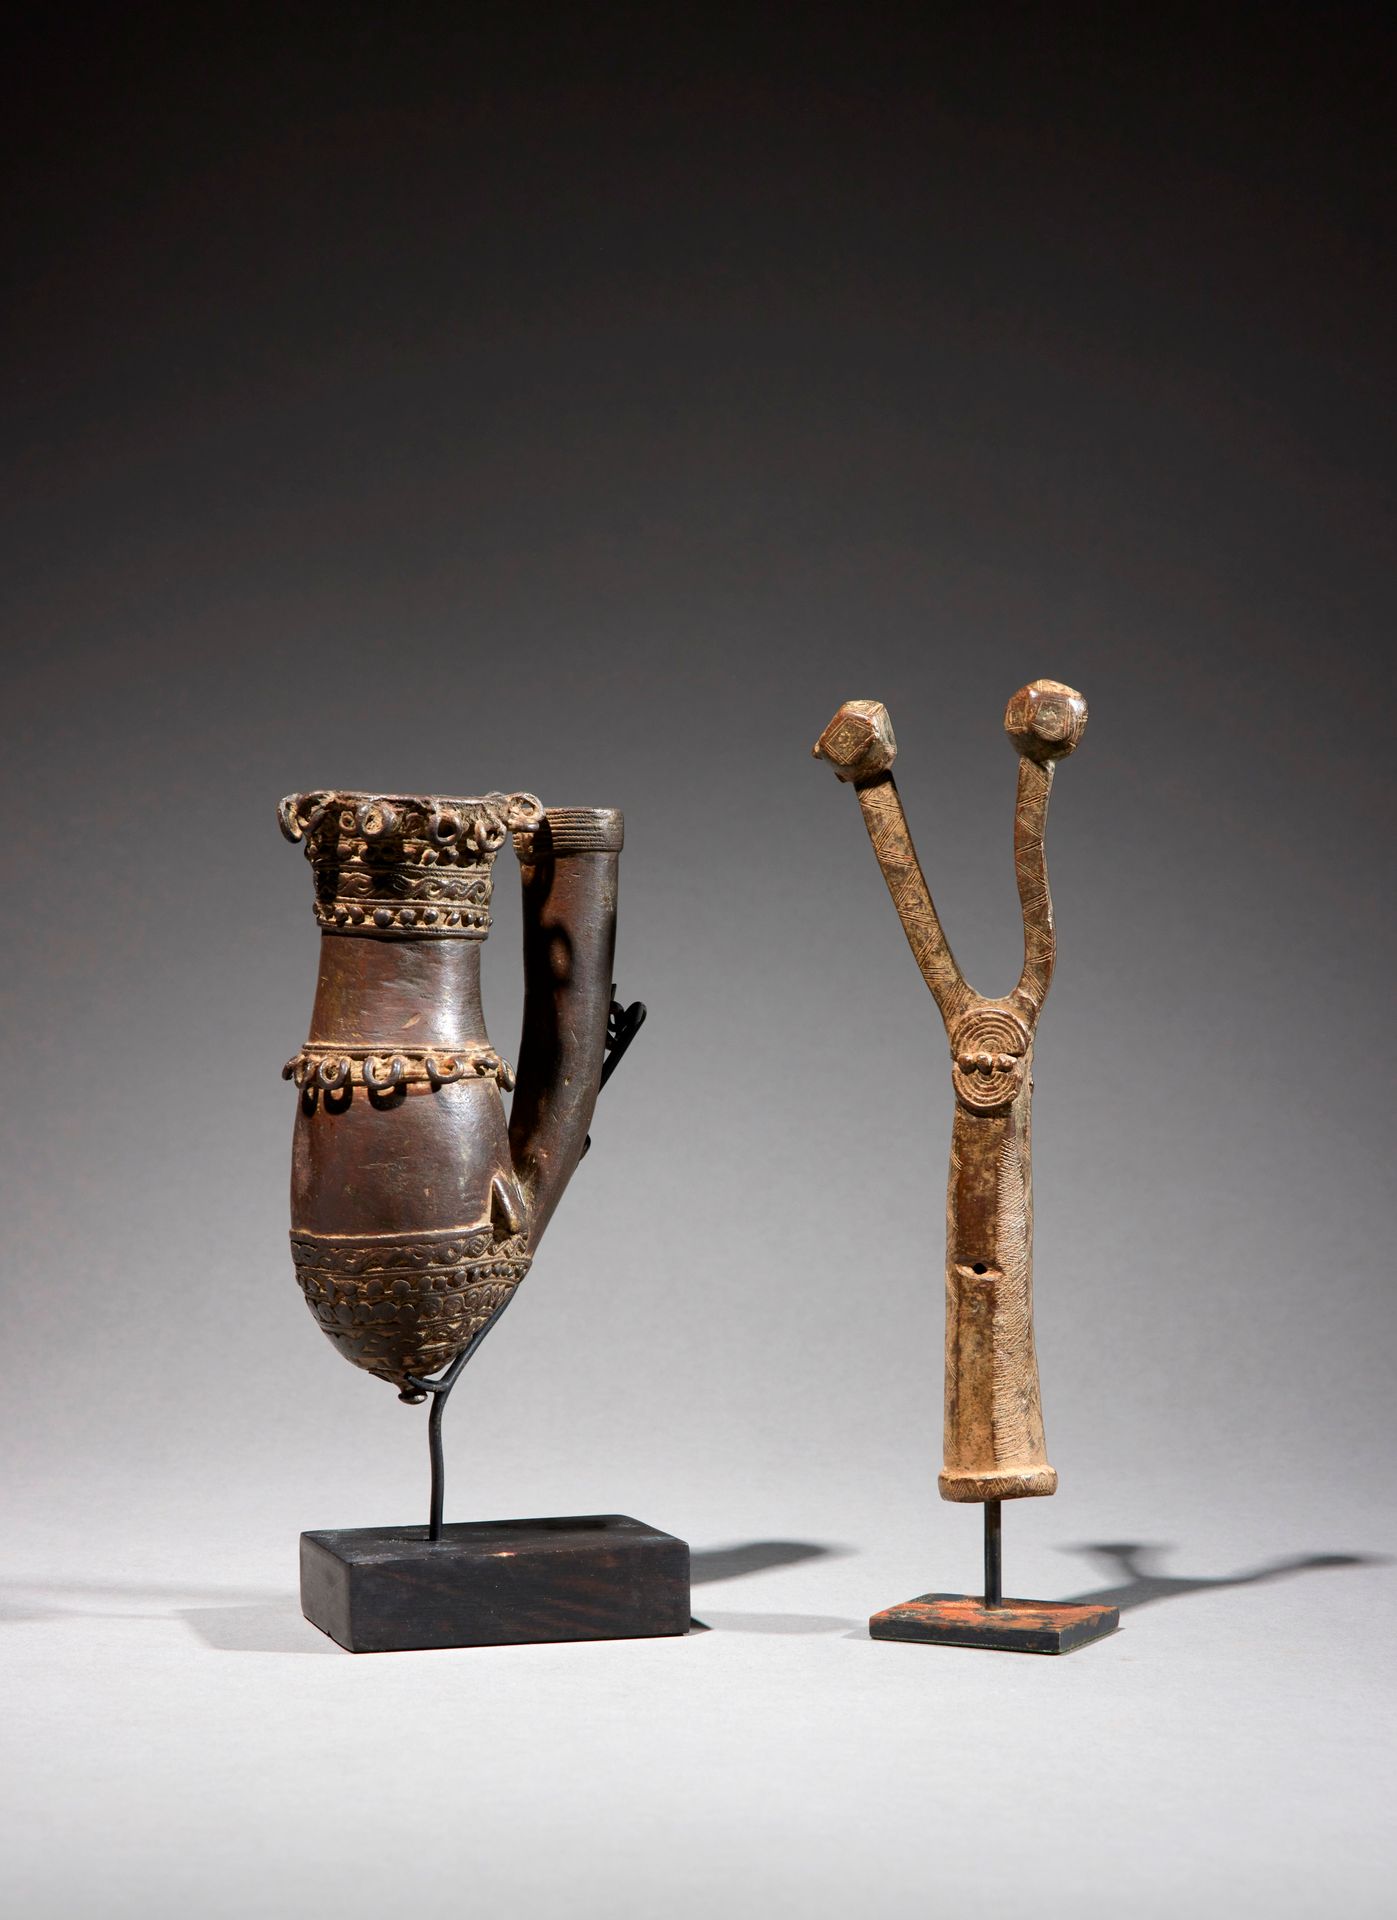 Null 两件人工制品

尼日利亚

铜质

H.14至19厘米



一套两件青铜器：包括一个美丽的Nupe烟斗和一个以两点结束的权杖顶。